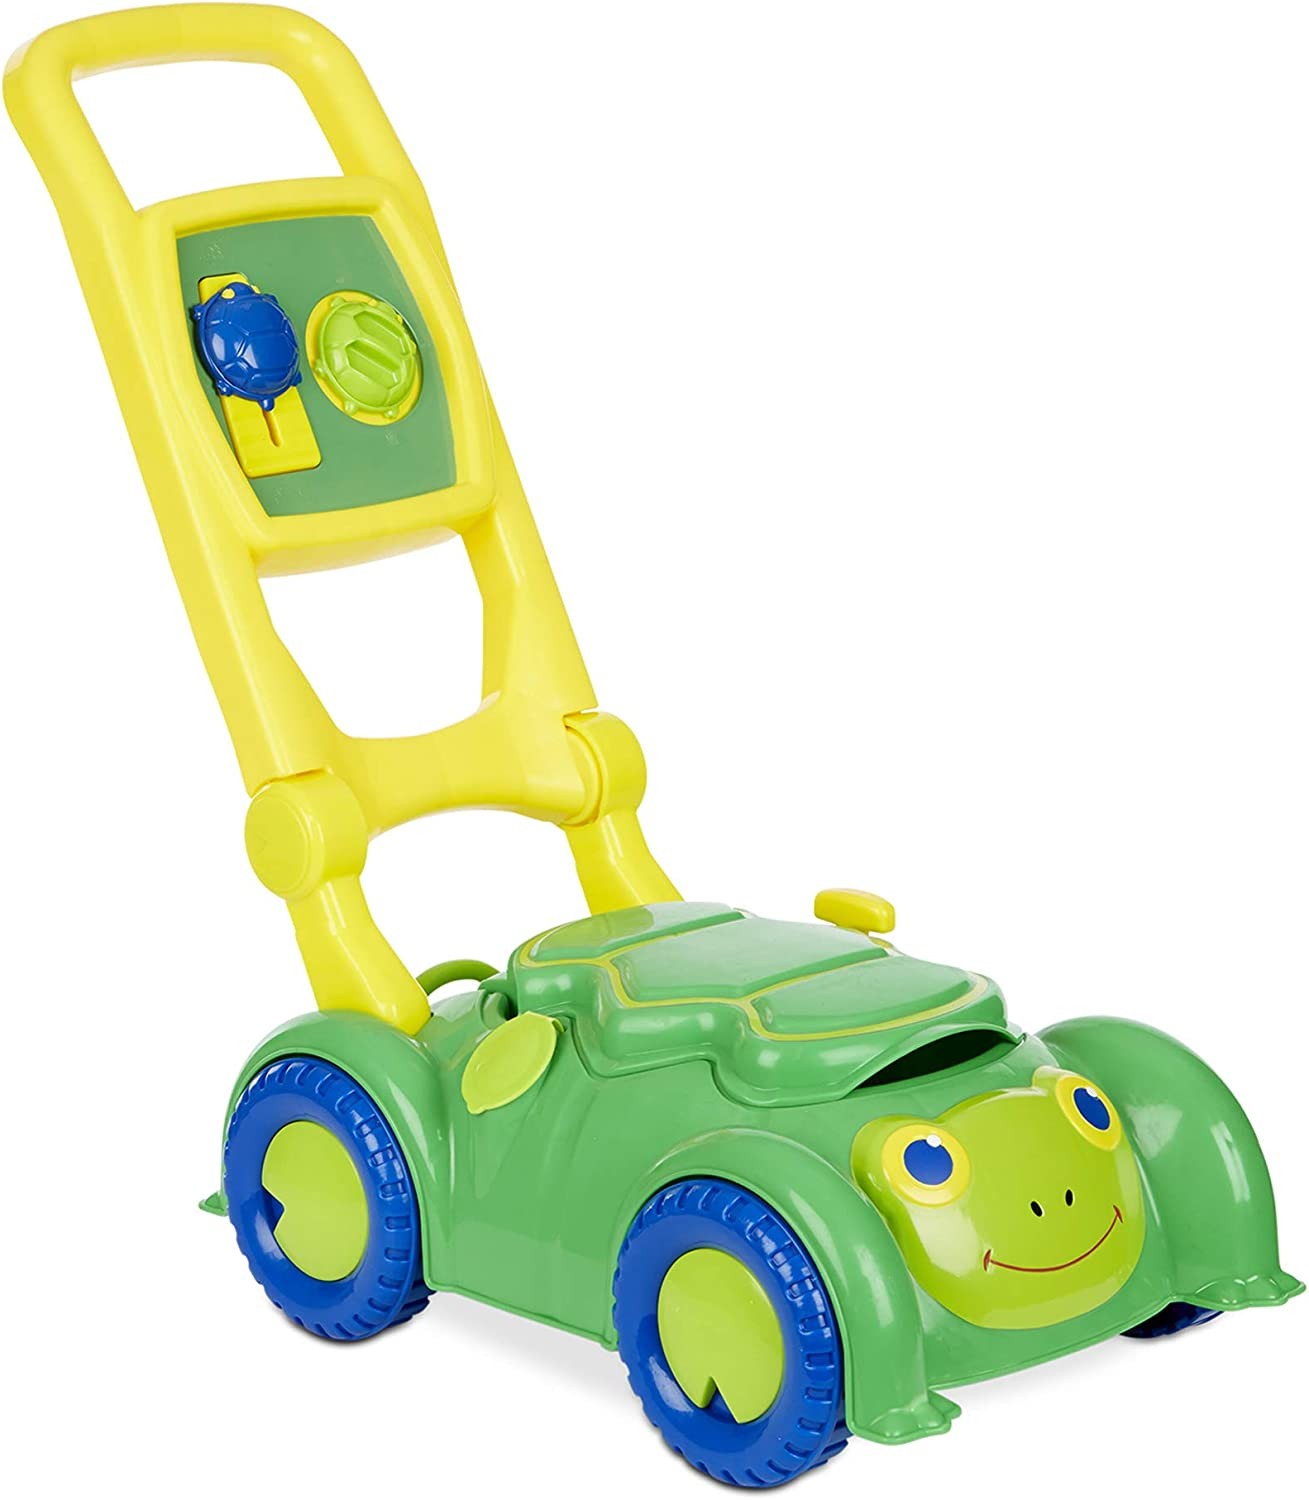 Toy Lawn Mower